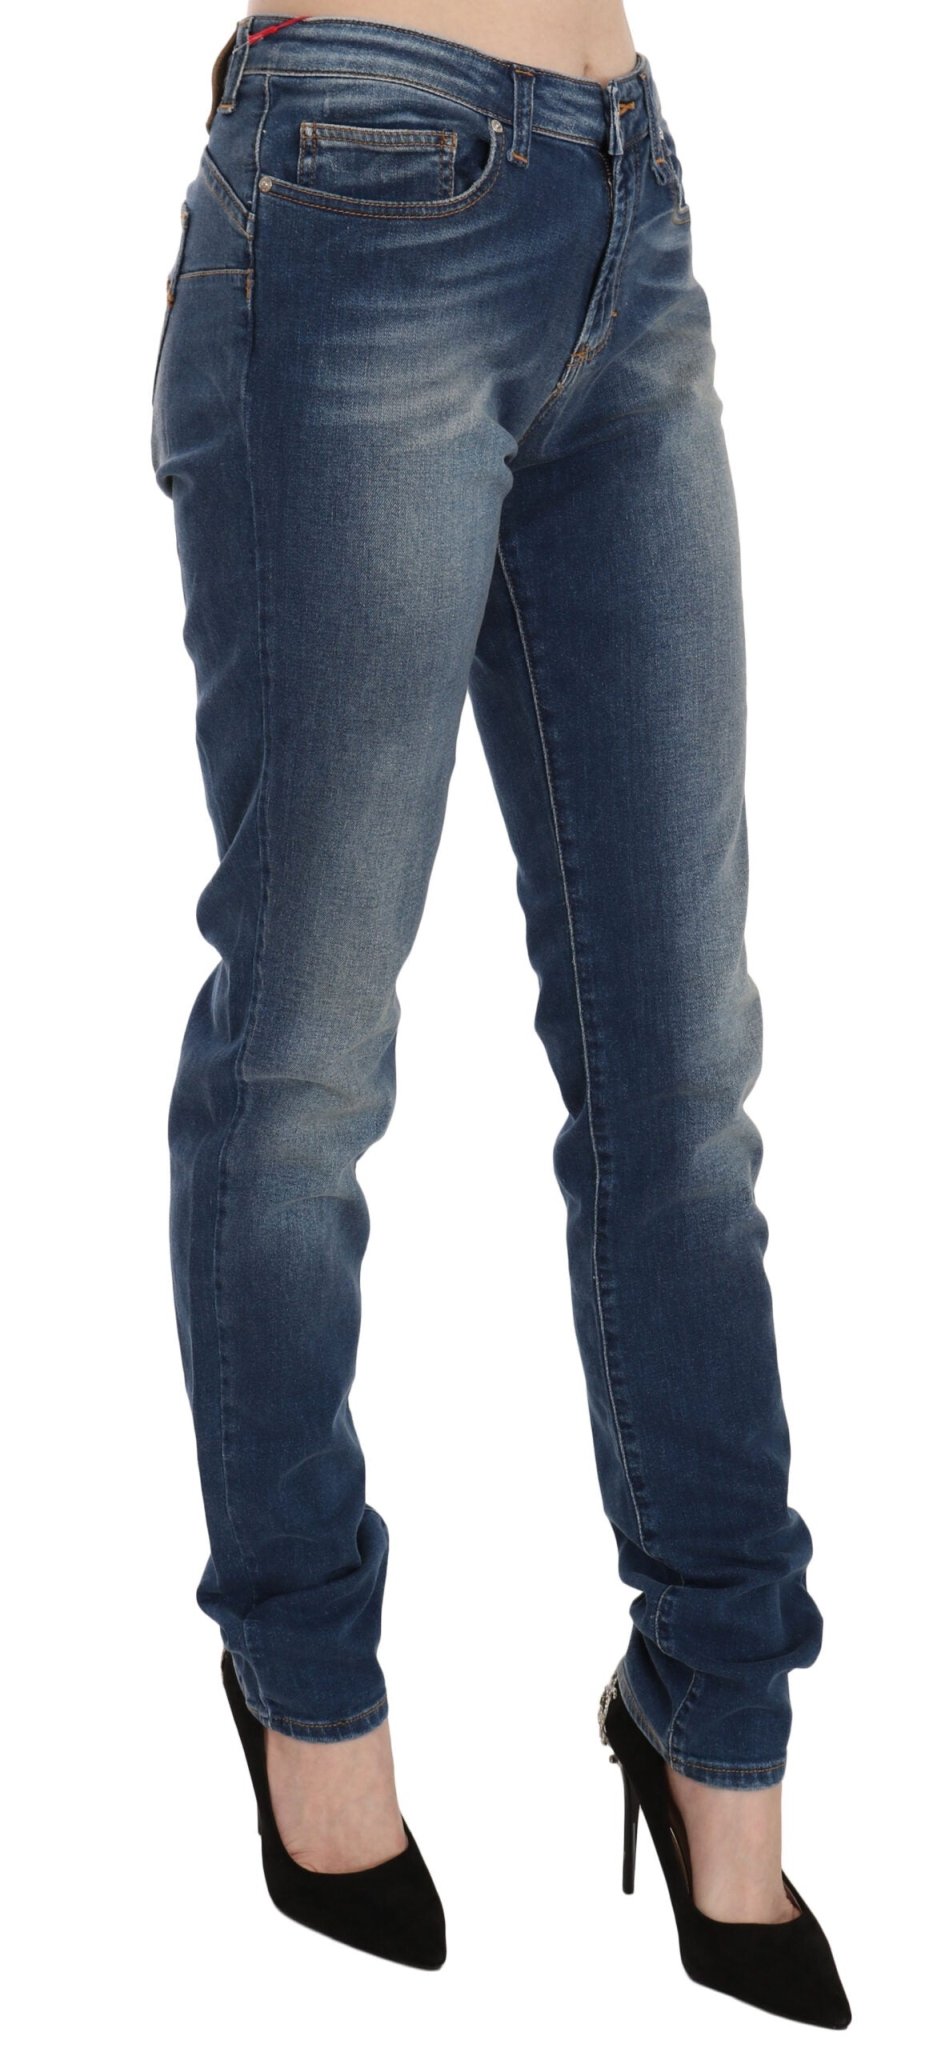 Fiorucci Svelte Mid Waist Slim Jeans in Vintage Blue